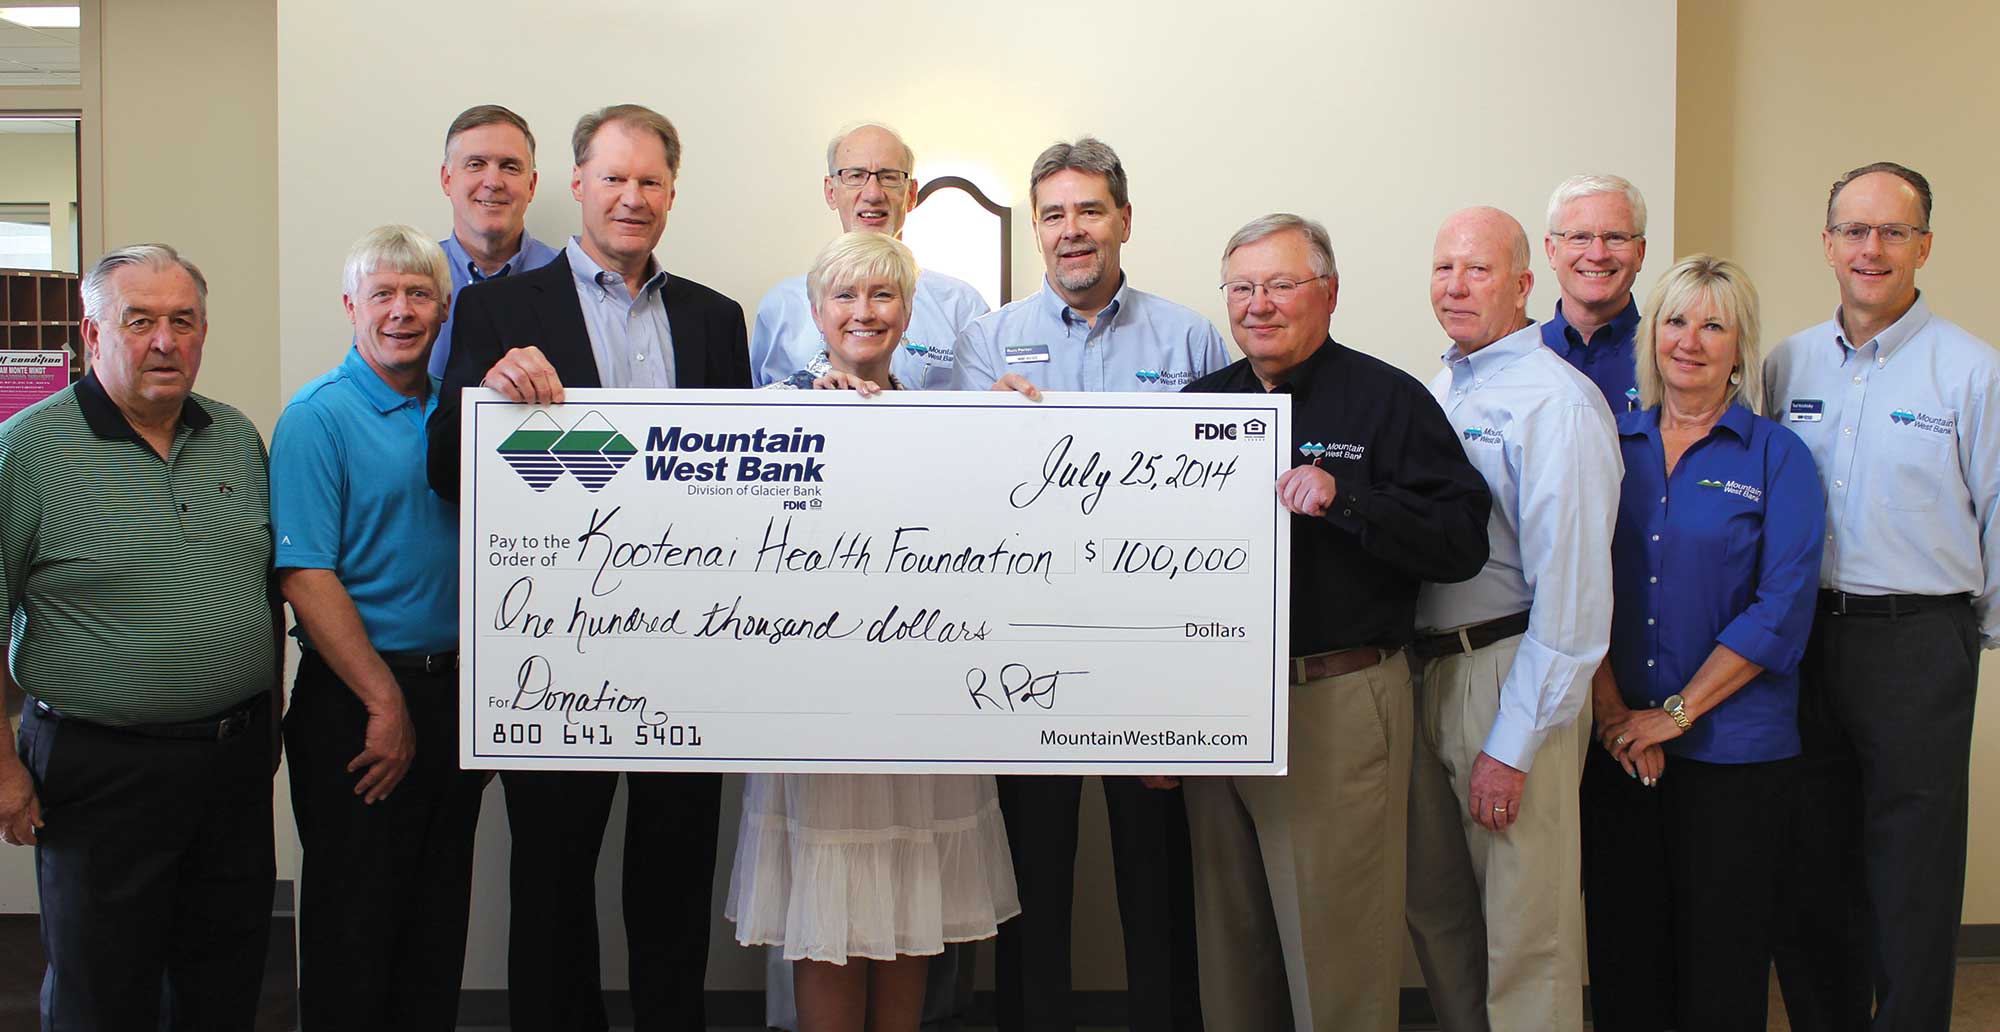 Mountain West Bank gifts $100,000 to Kootenai Health Foundation